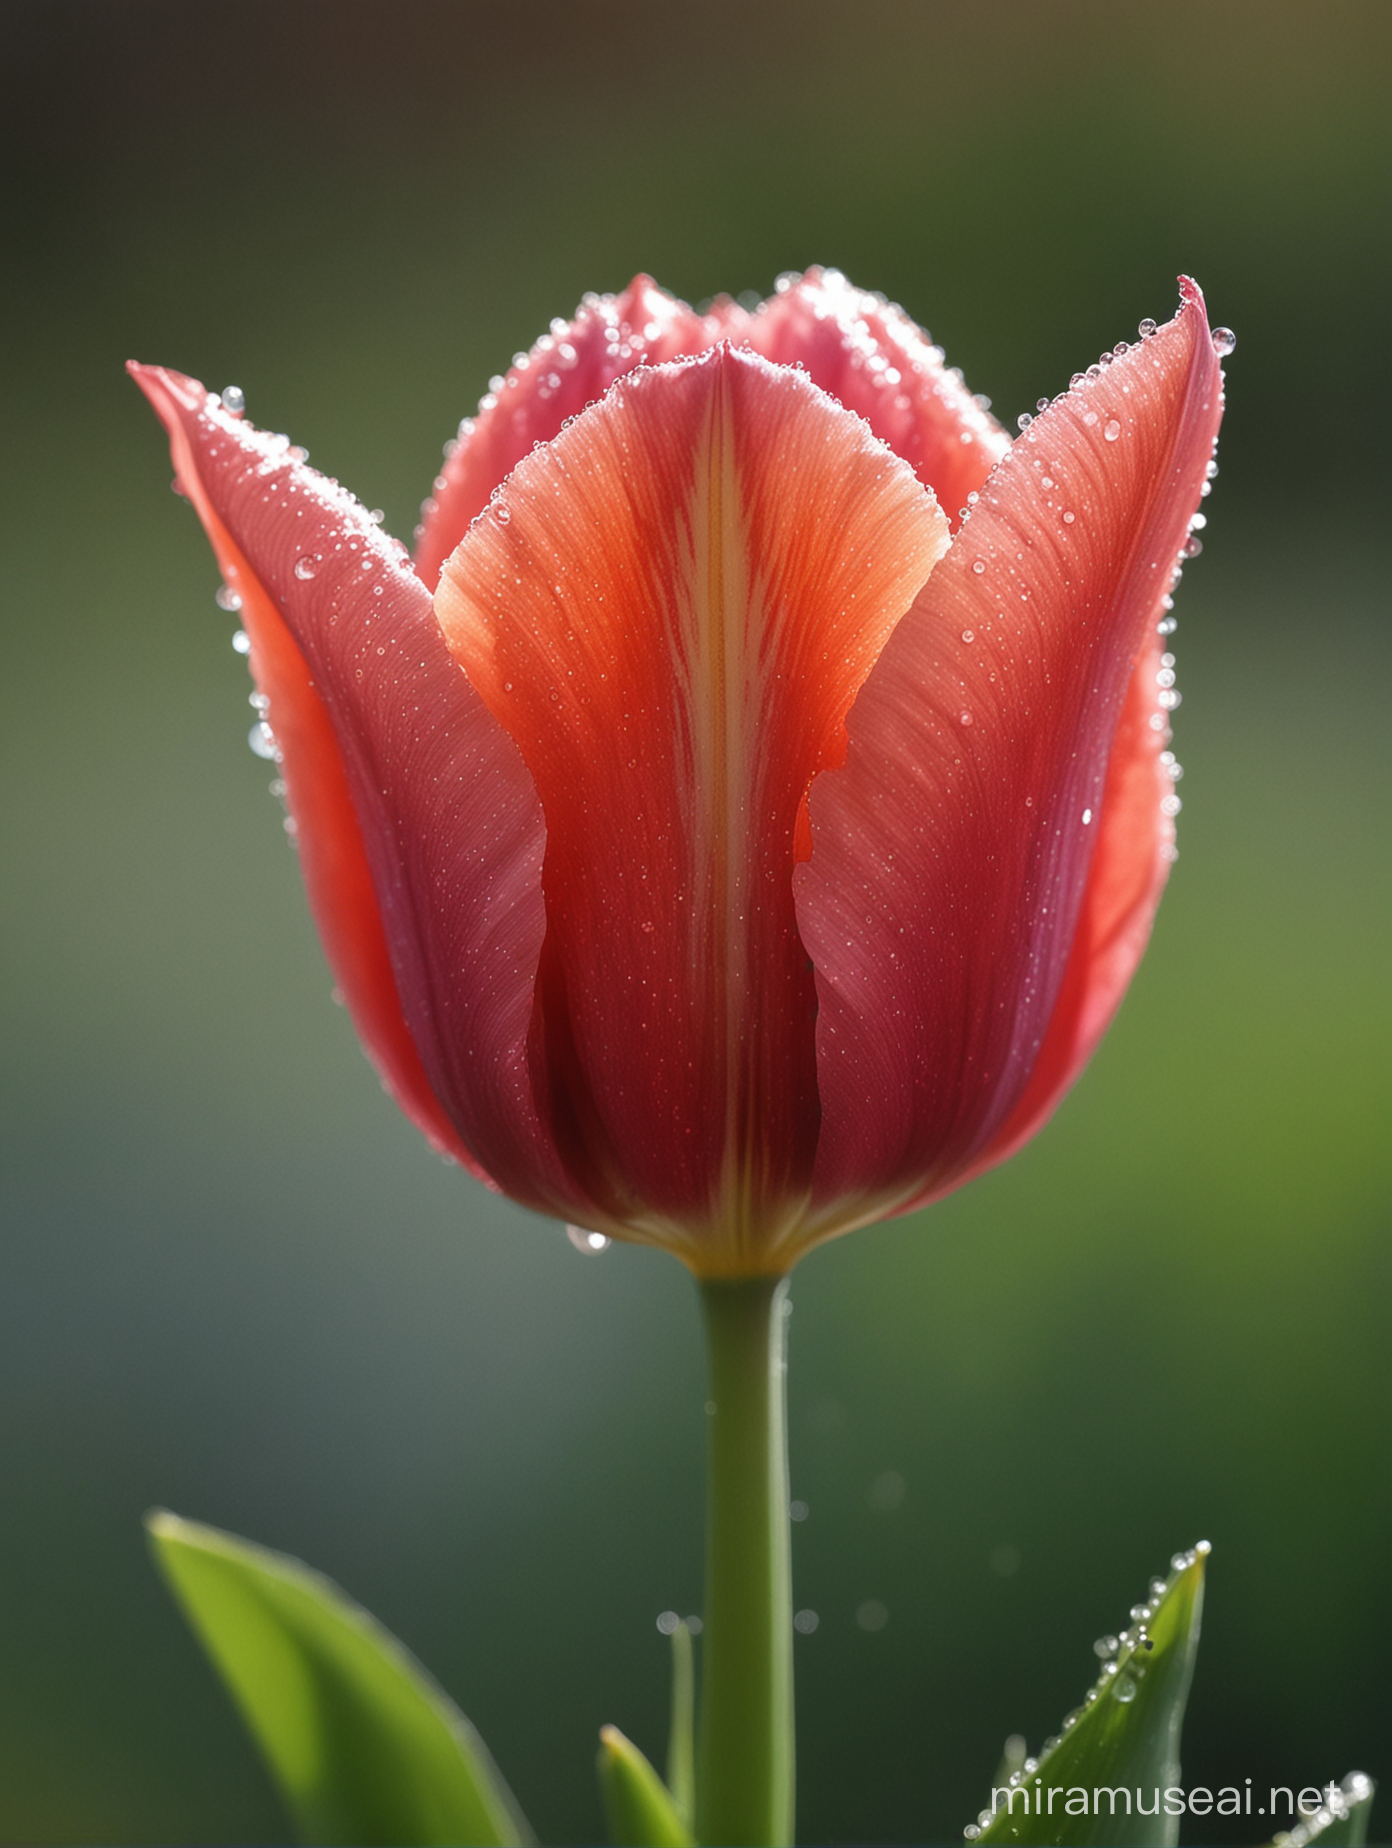 Realistic CloseUp of Dewy Garden Tulip